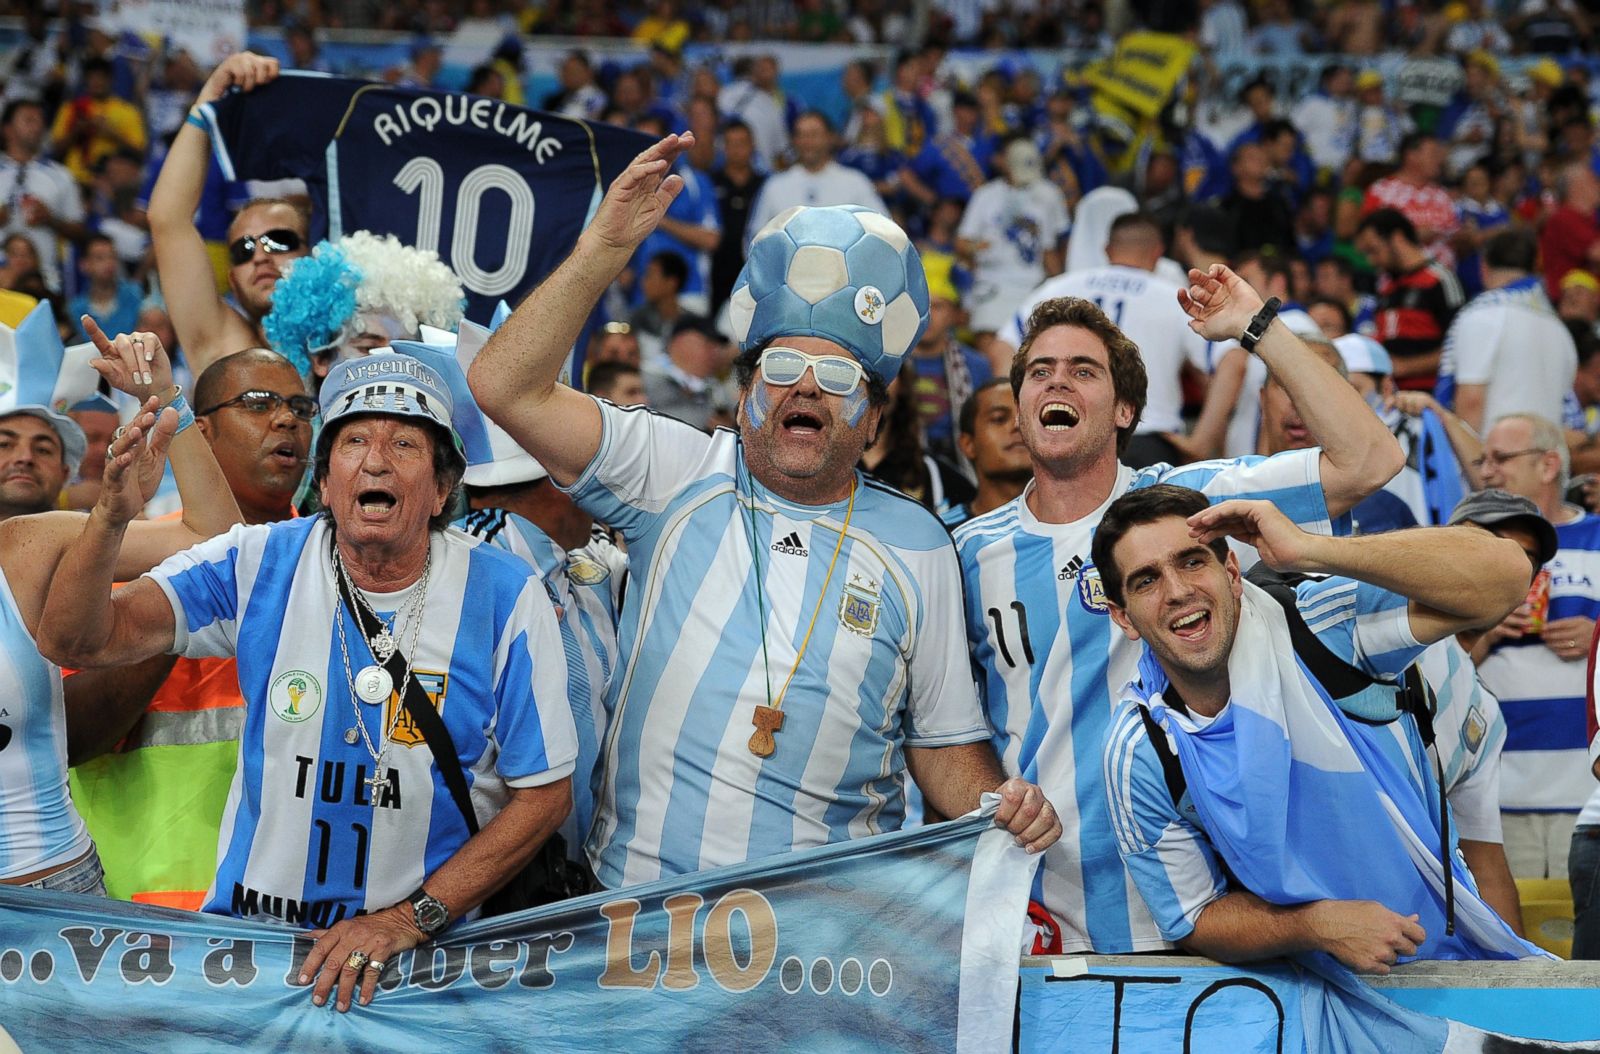 The Craziest World Cup Fans Photos | Image #32 - ABC News